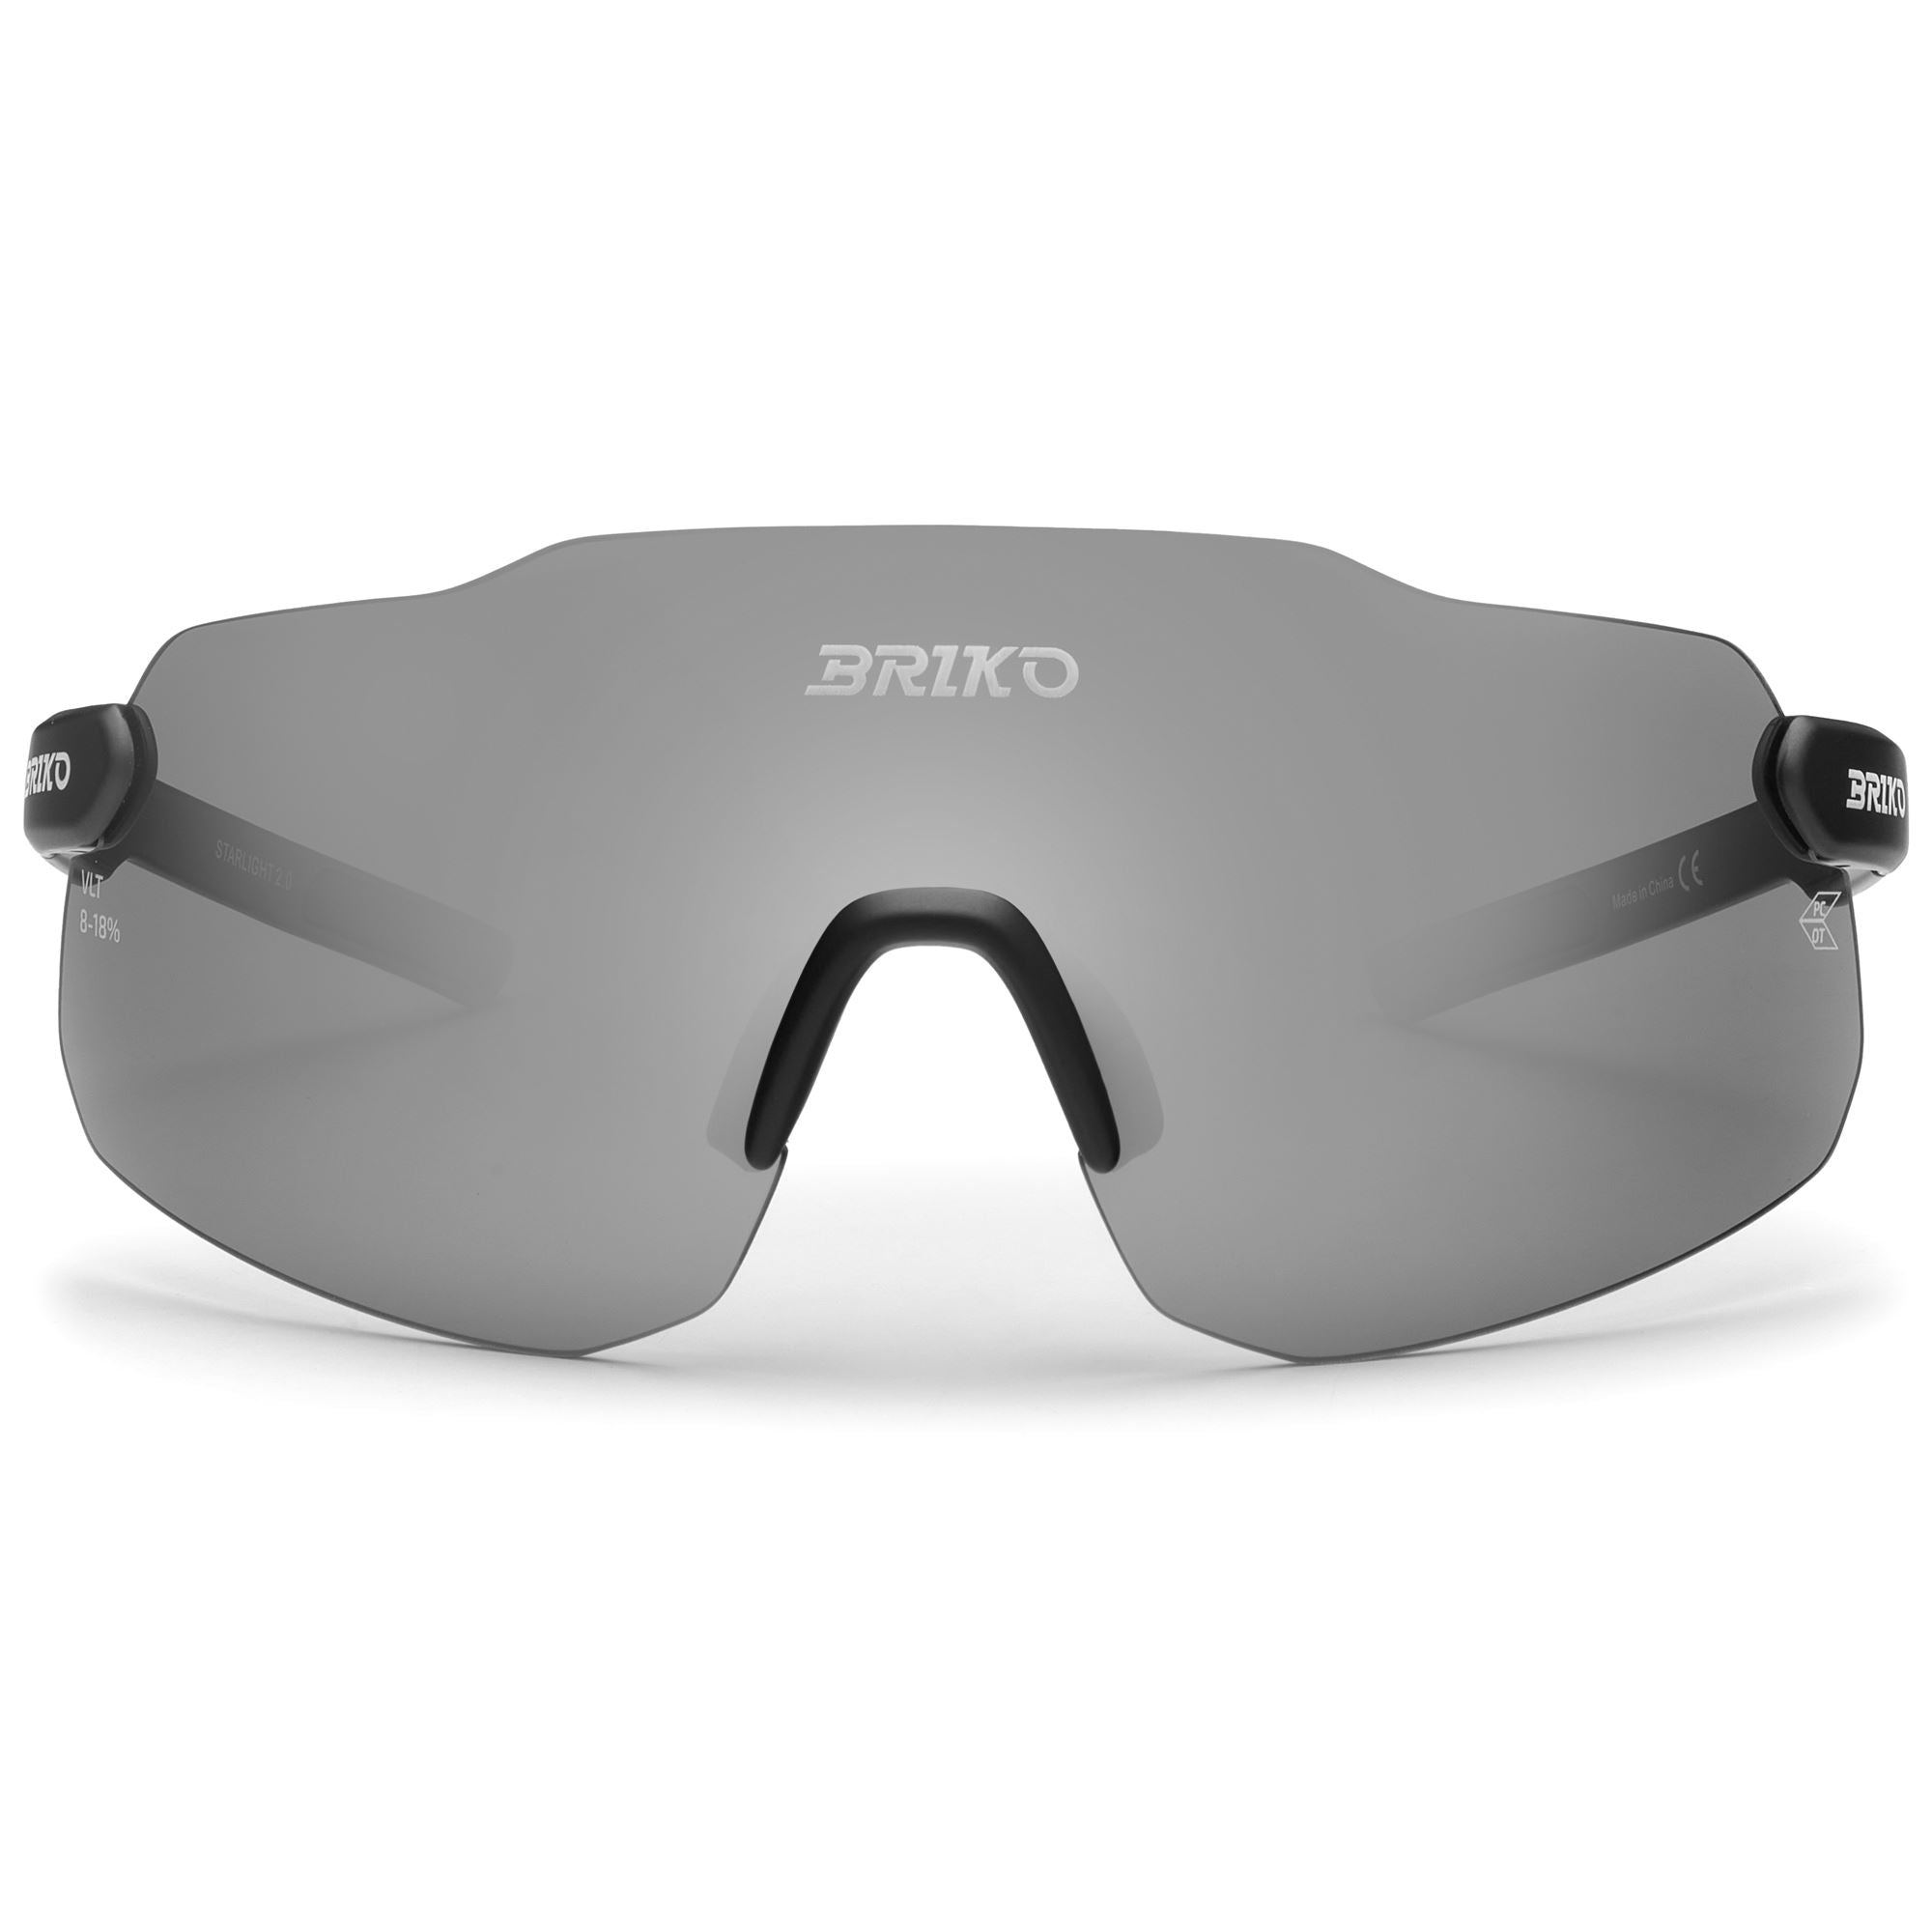 Eyewear new collection – Briko.com